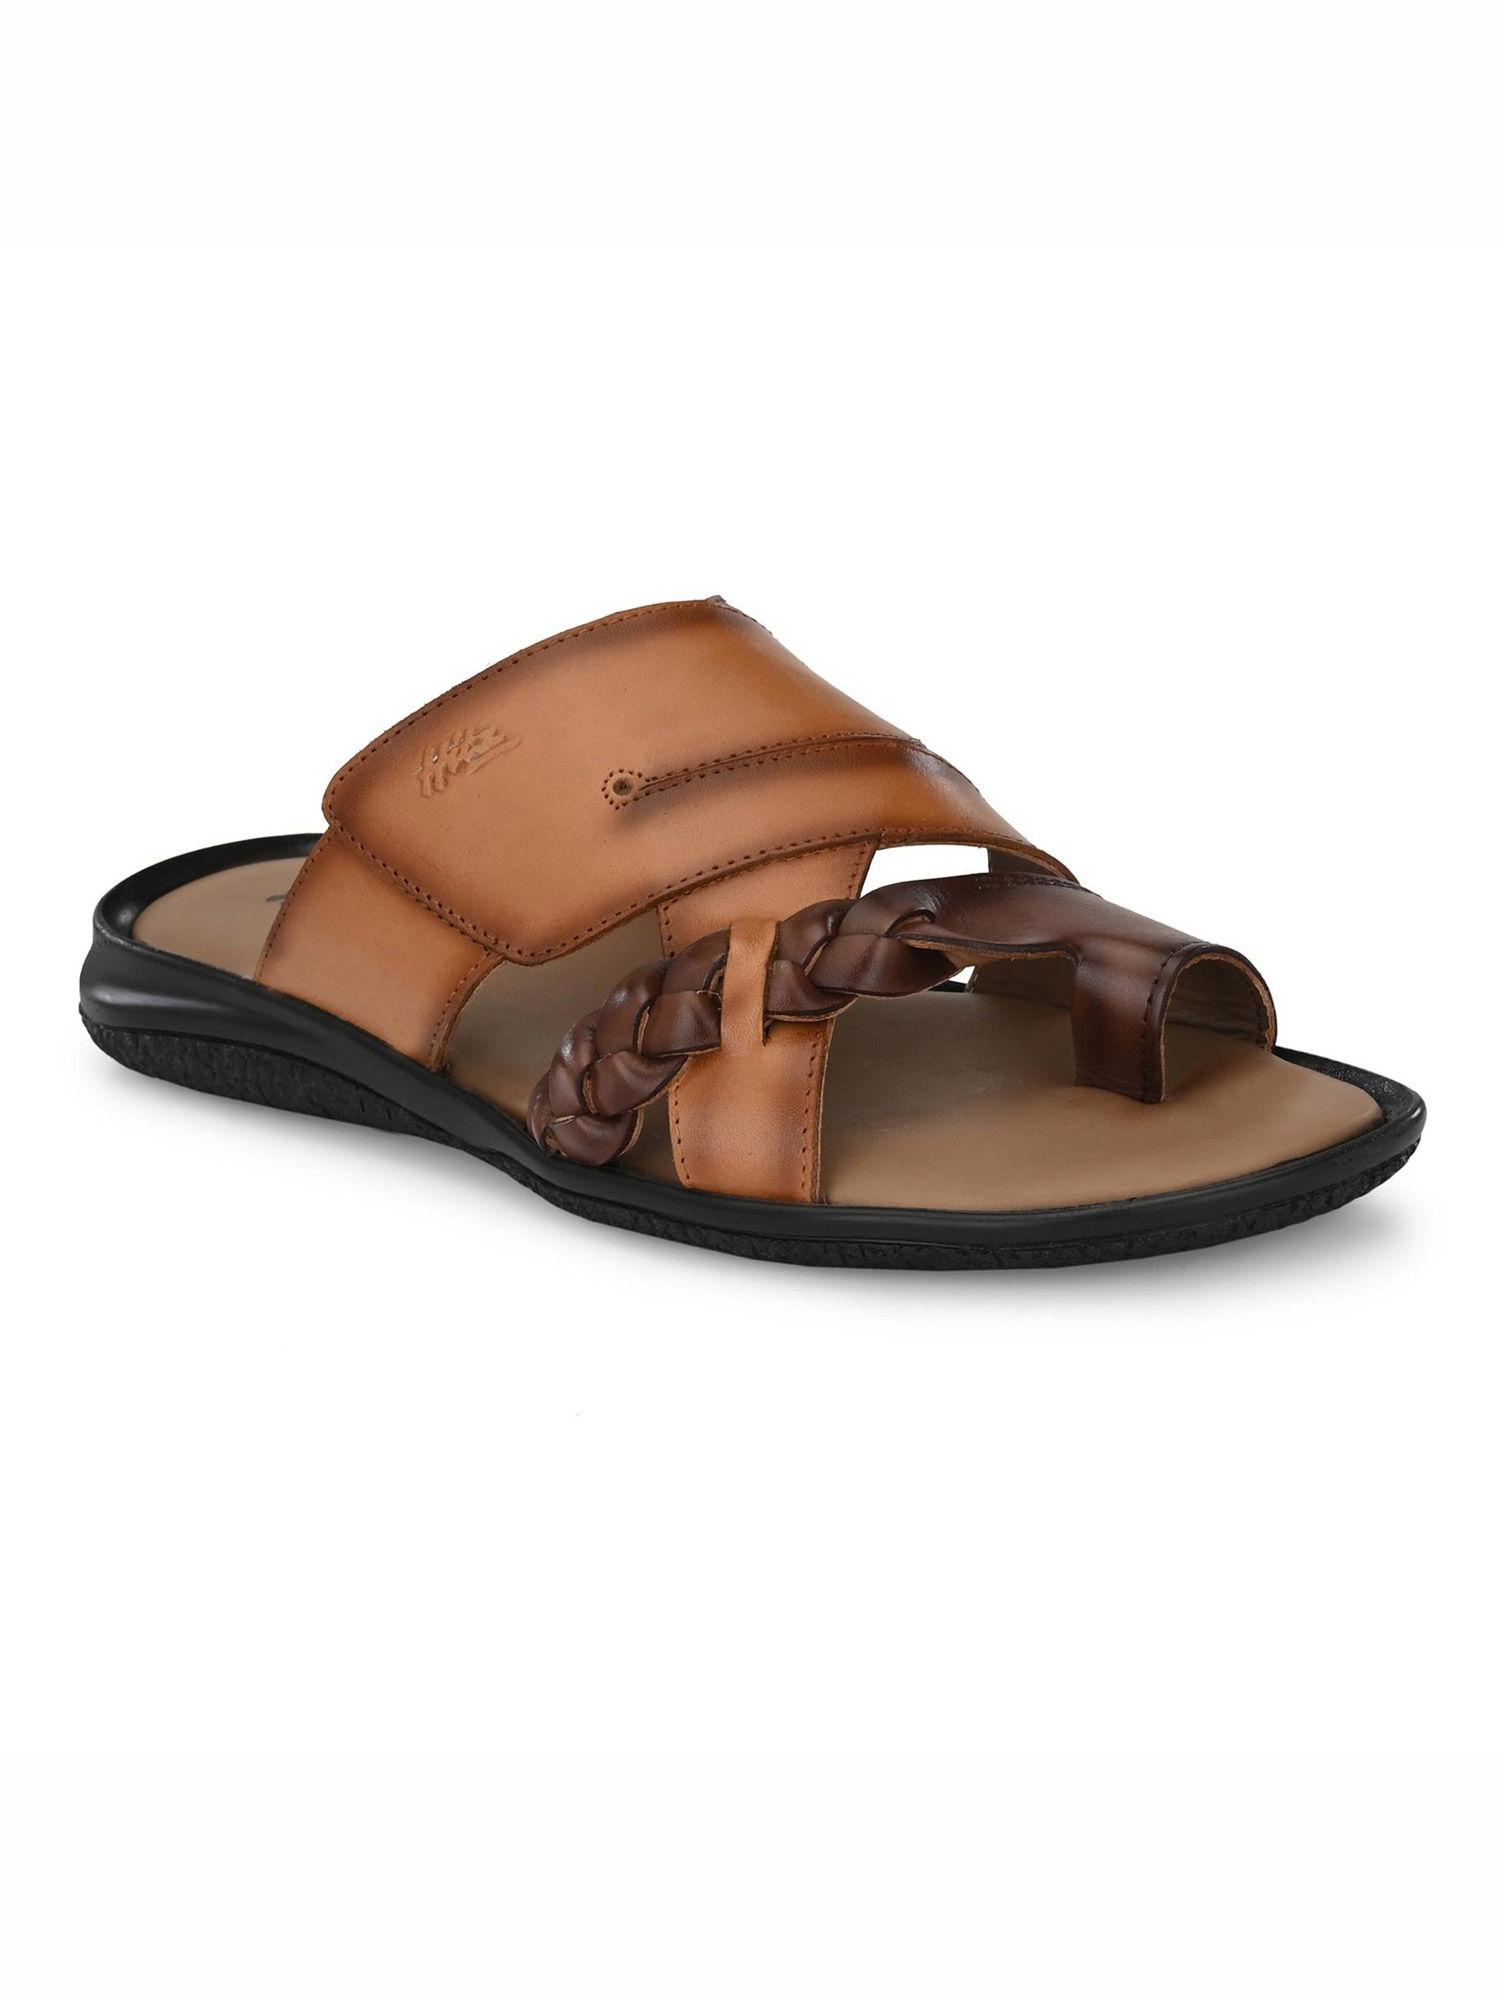 tan leather sandal